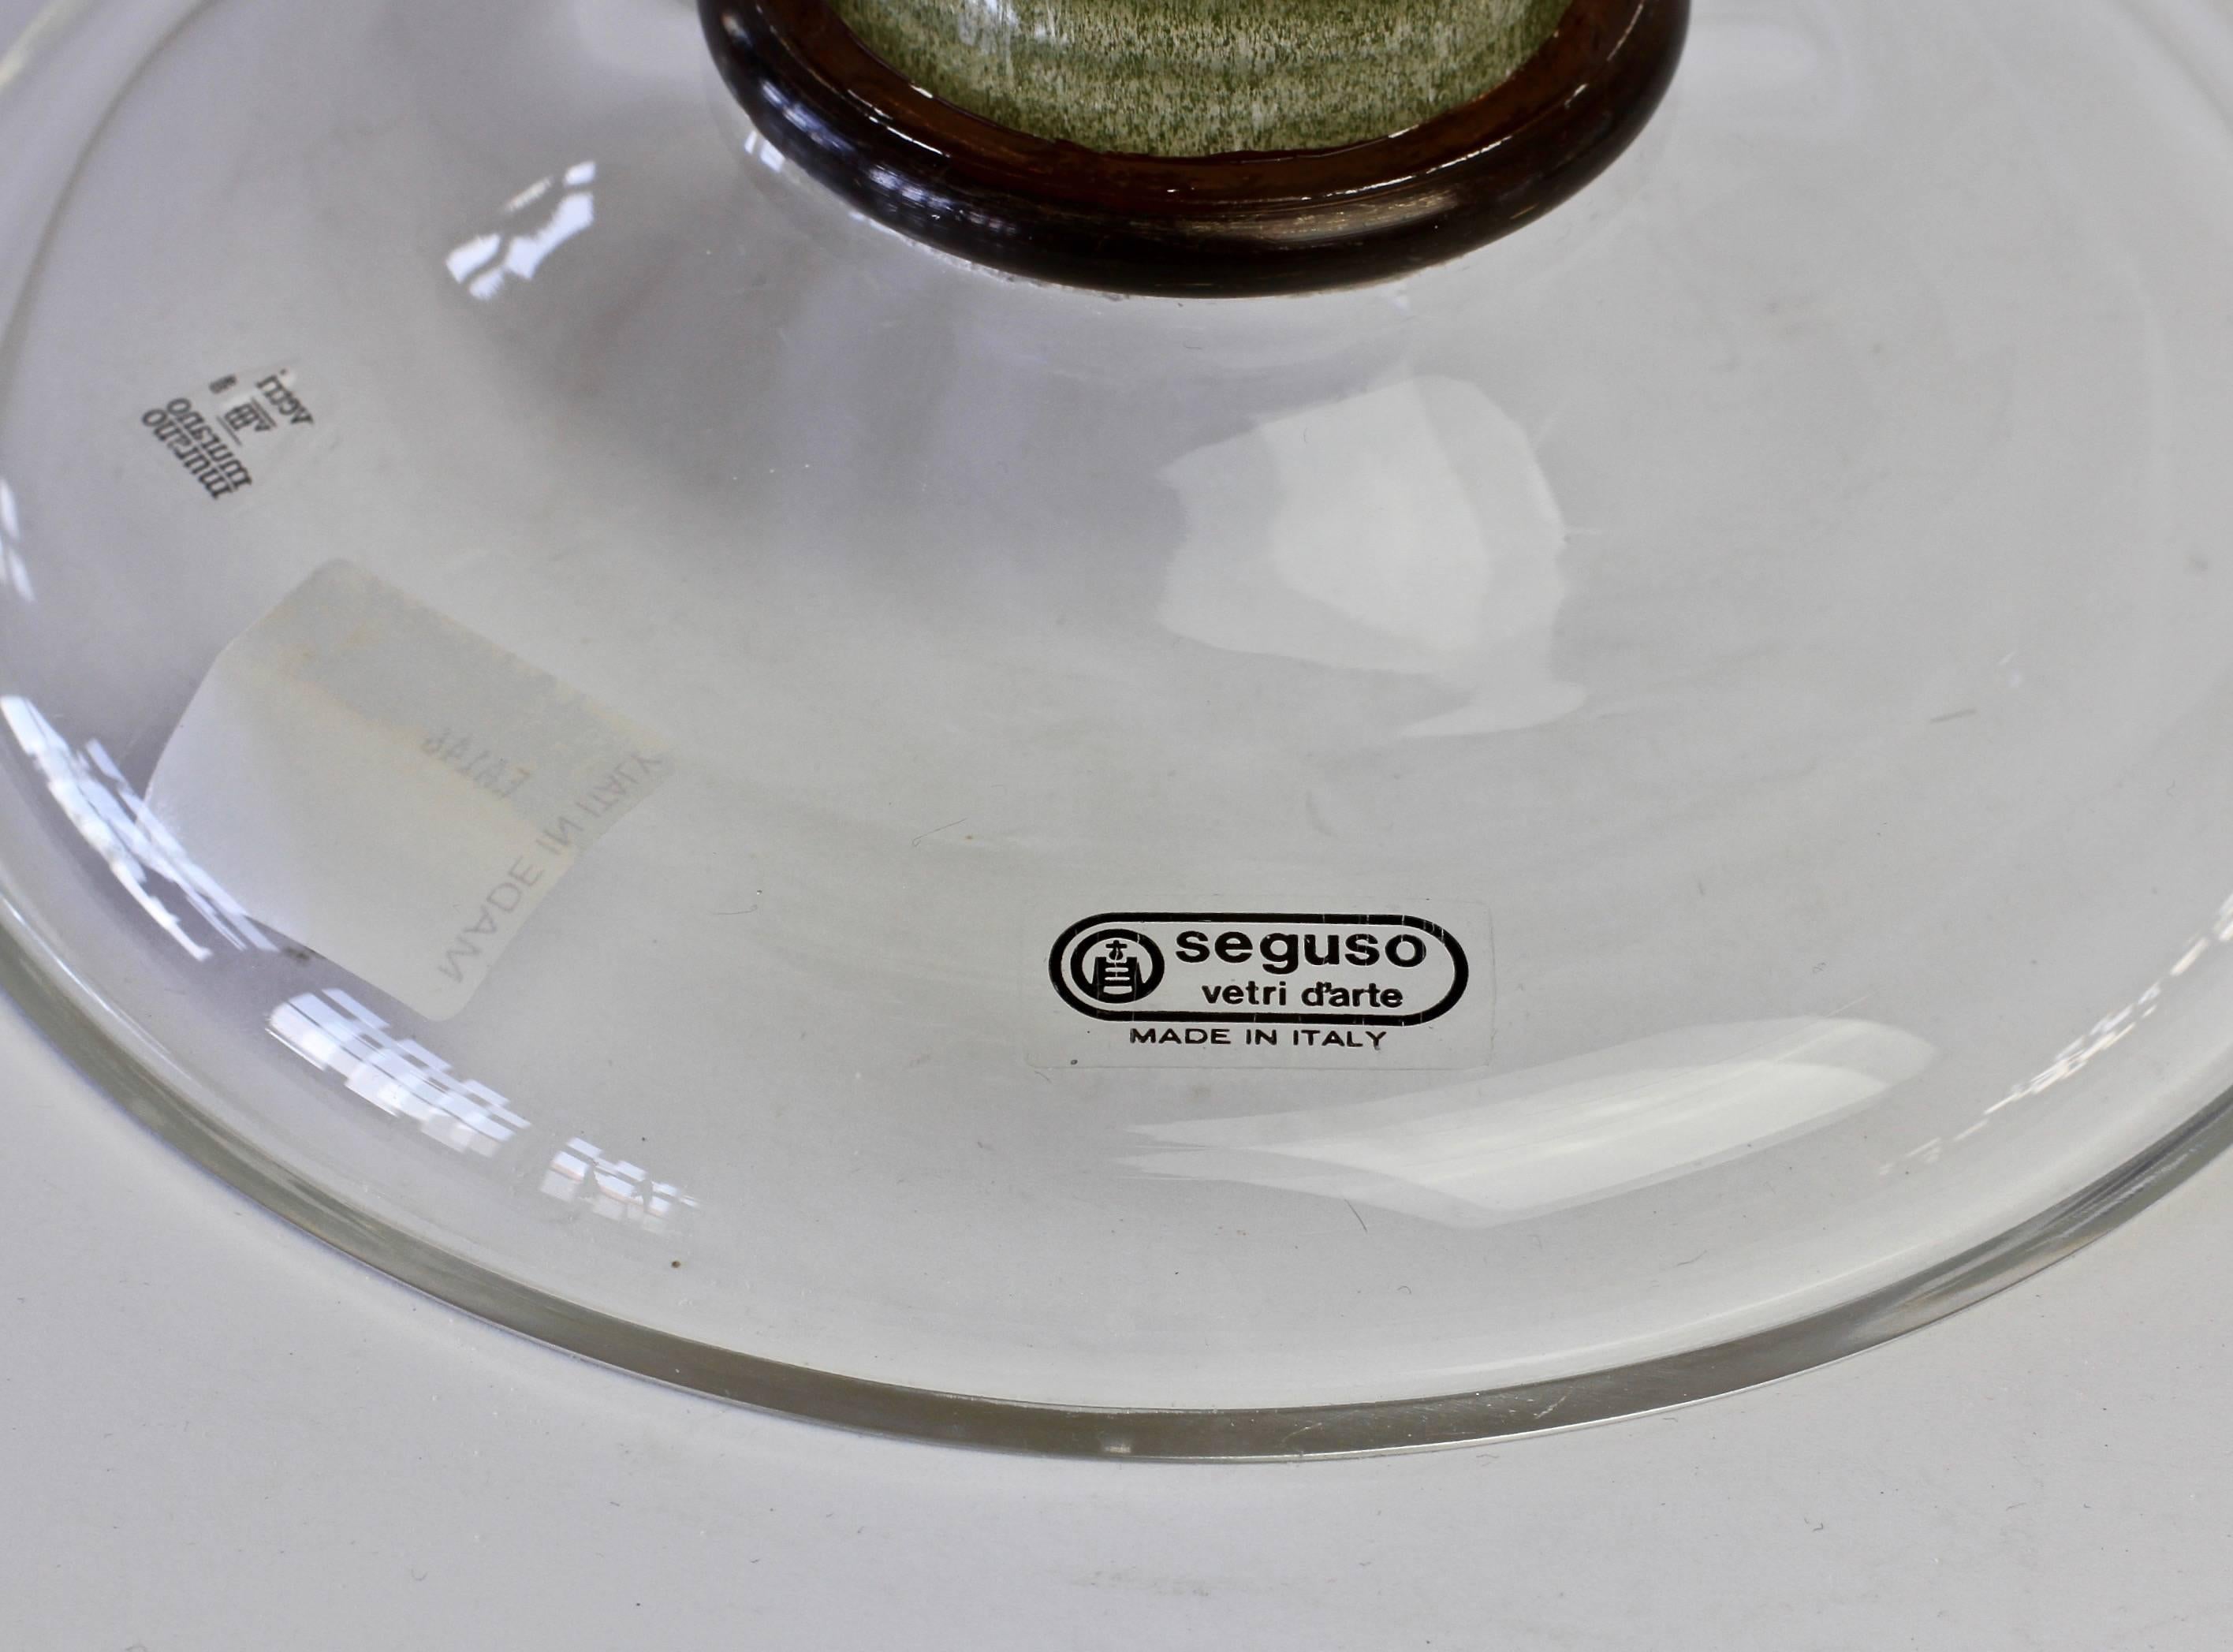 Monumental Huge Signed Seguso Vetri Darte Murano Glass Serving Bowl or Dish For Sale 5